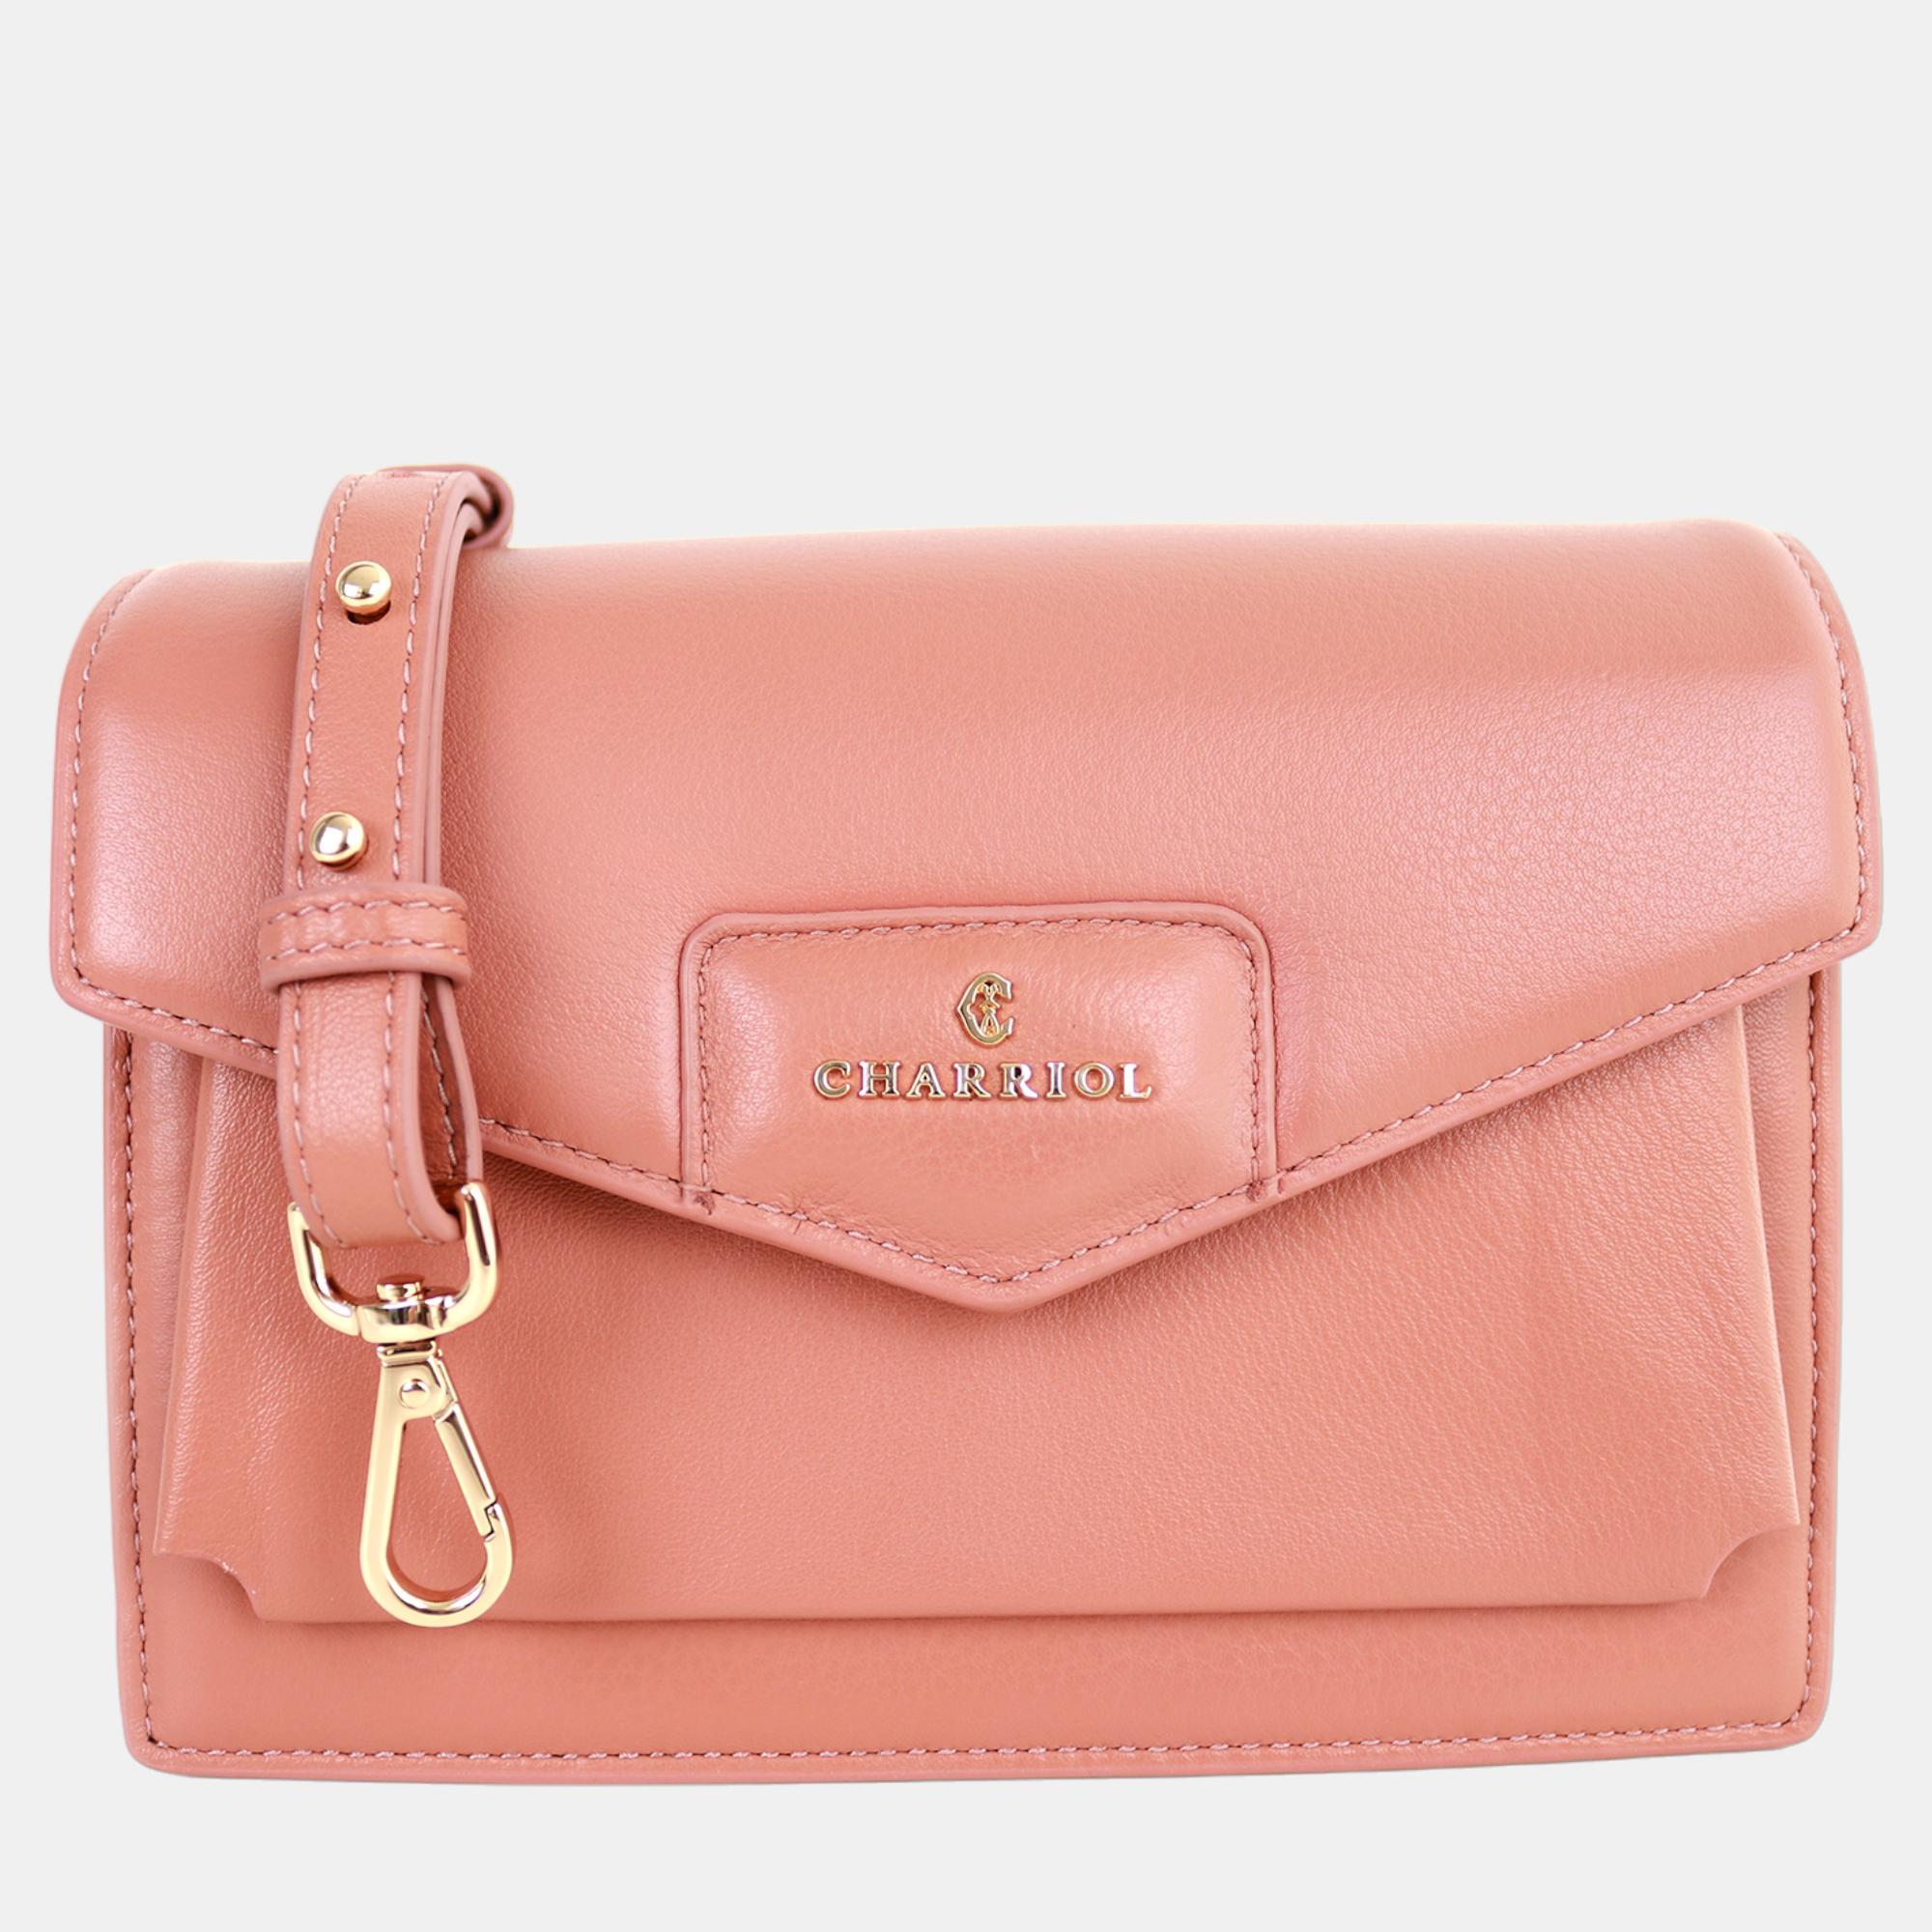 Pre-owned Charriol Light Brown Leather Twilight Handbag